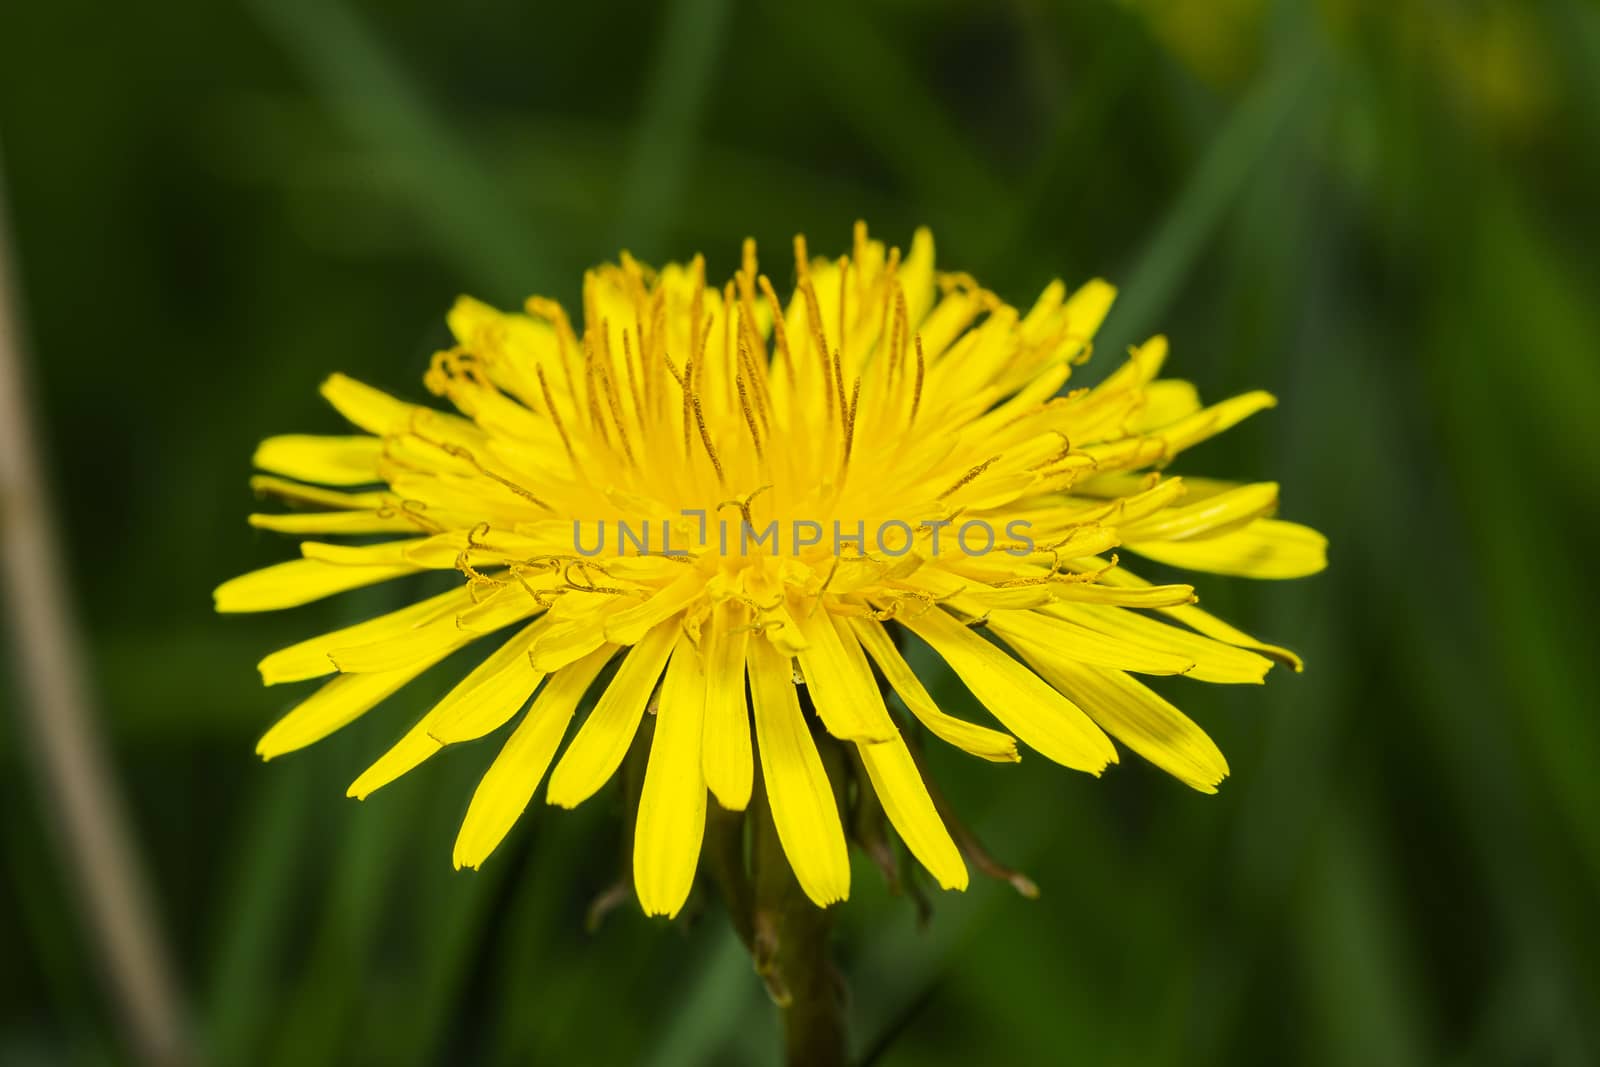 Macro shot of a single dandelion flower against a grass background